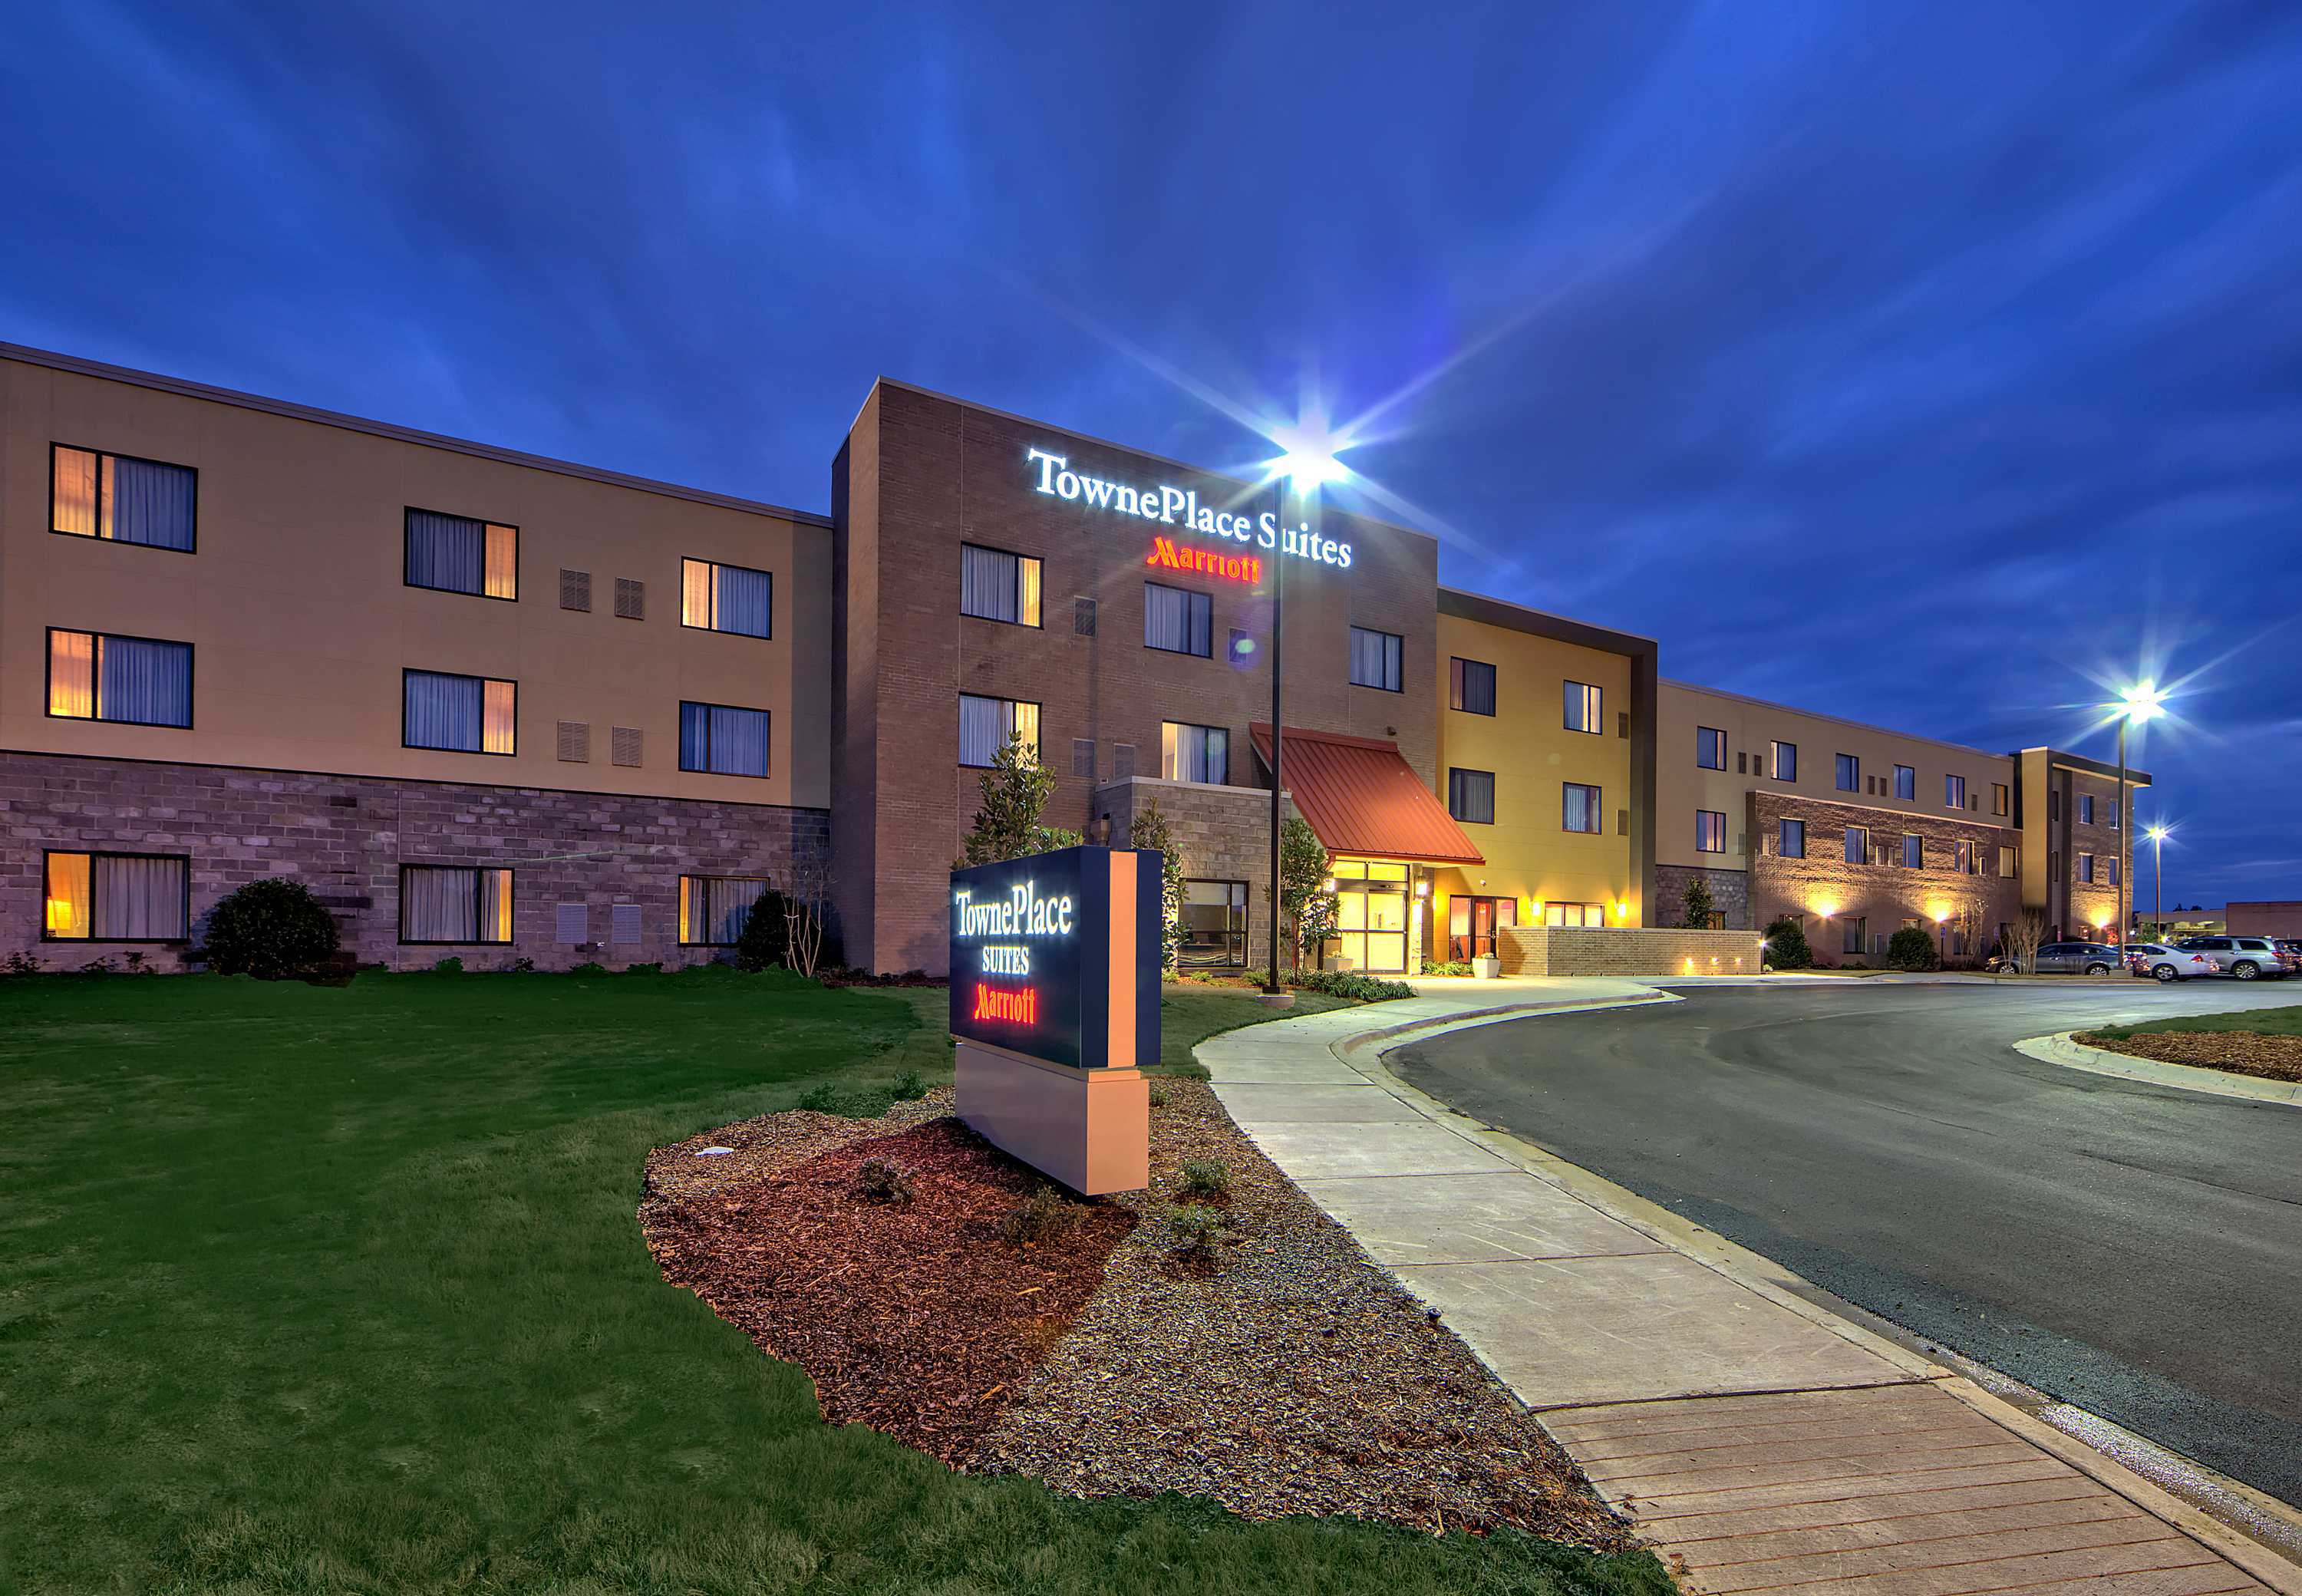 Photo of TownePlace Suites by Marriott Hattiesburg, Hattiesburg, MS